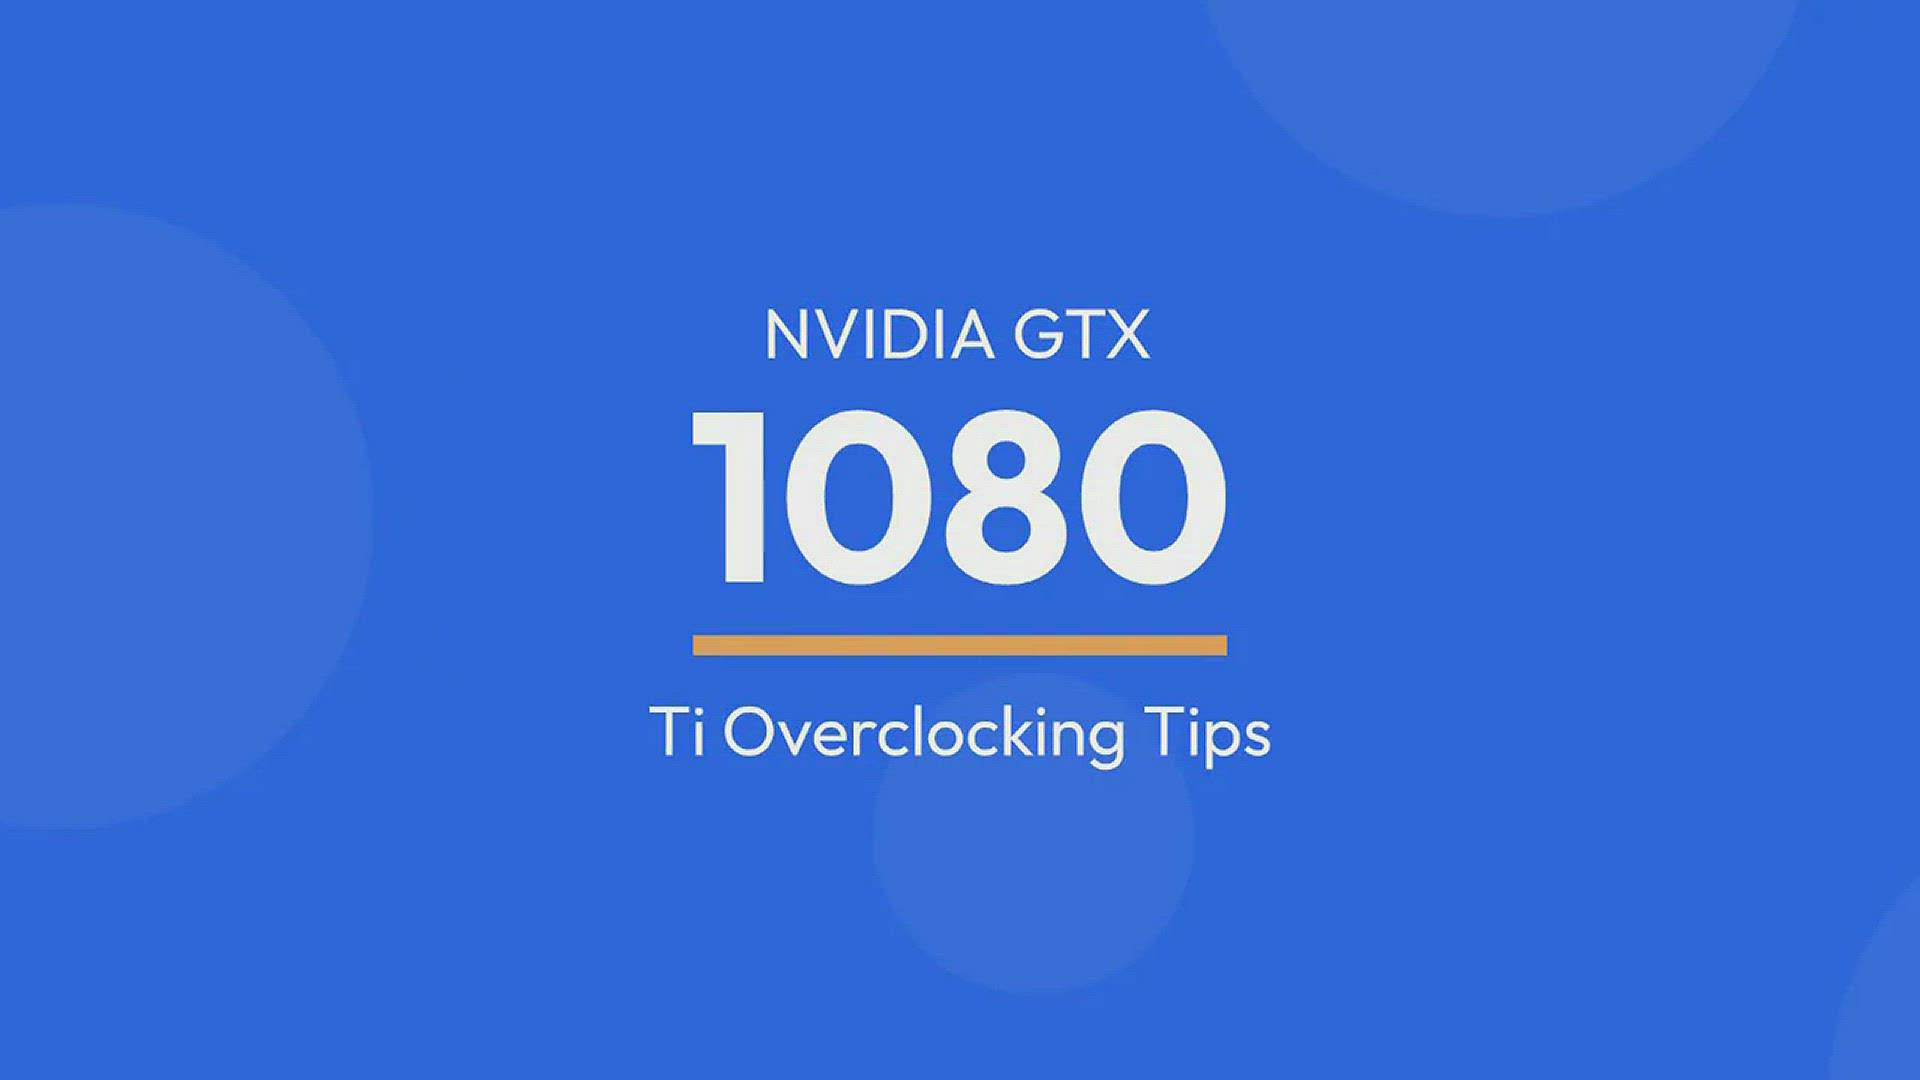 'Video thumbnail for NVIDIA GTX 1080 Ti Overclocking Tips'